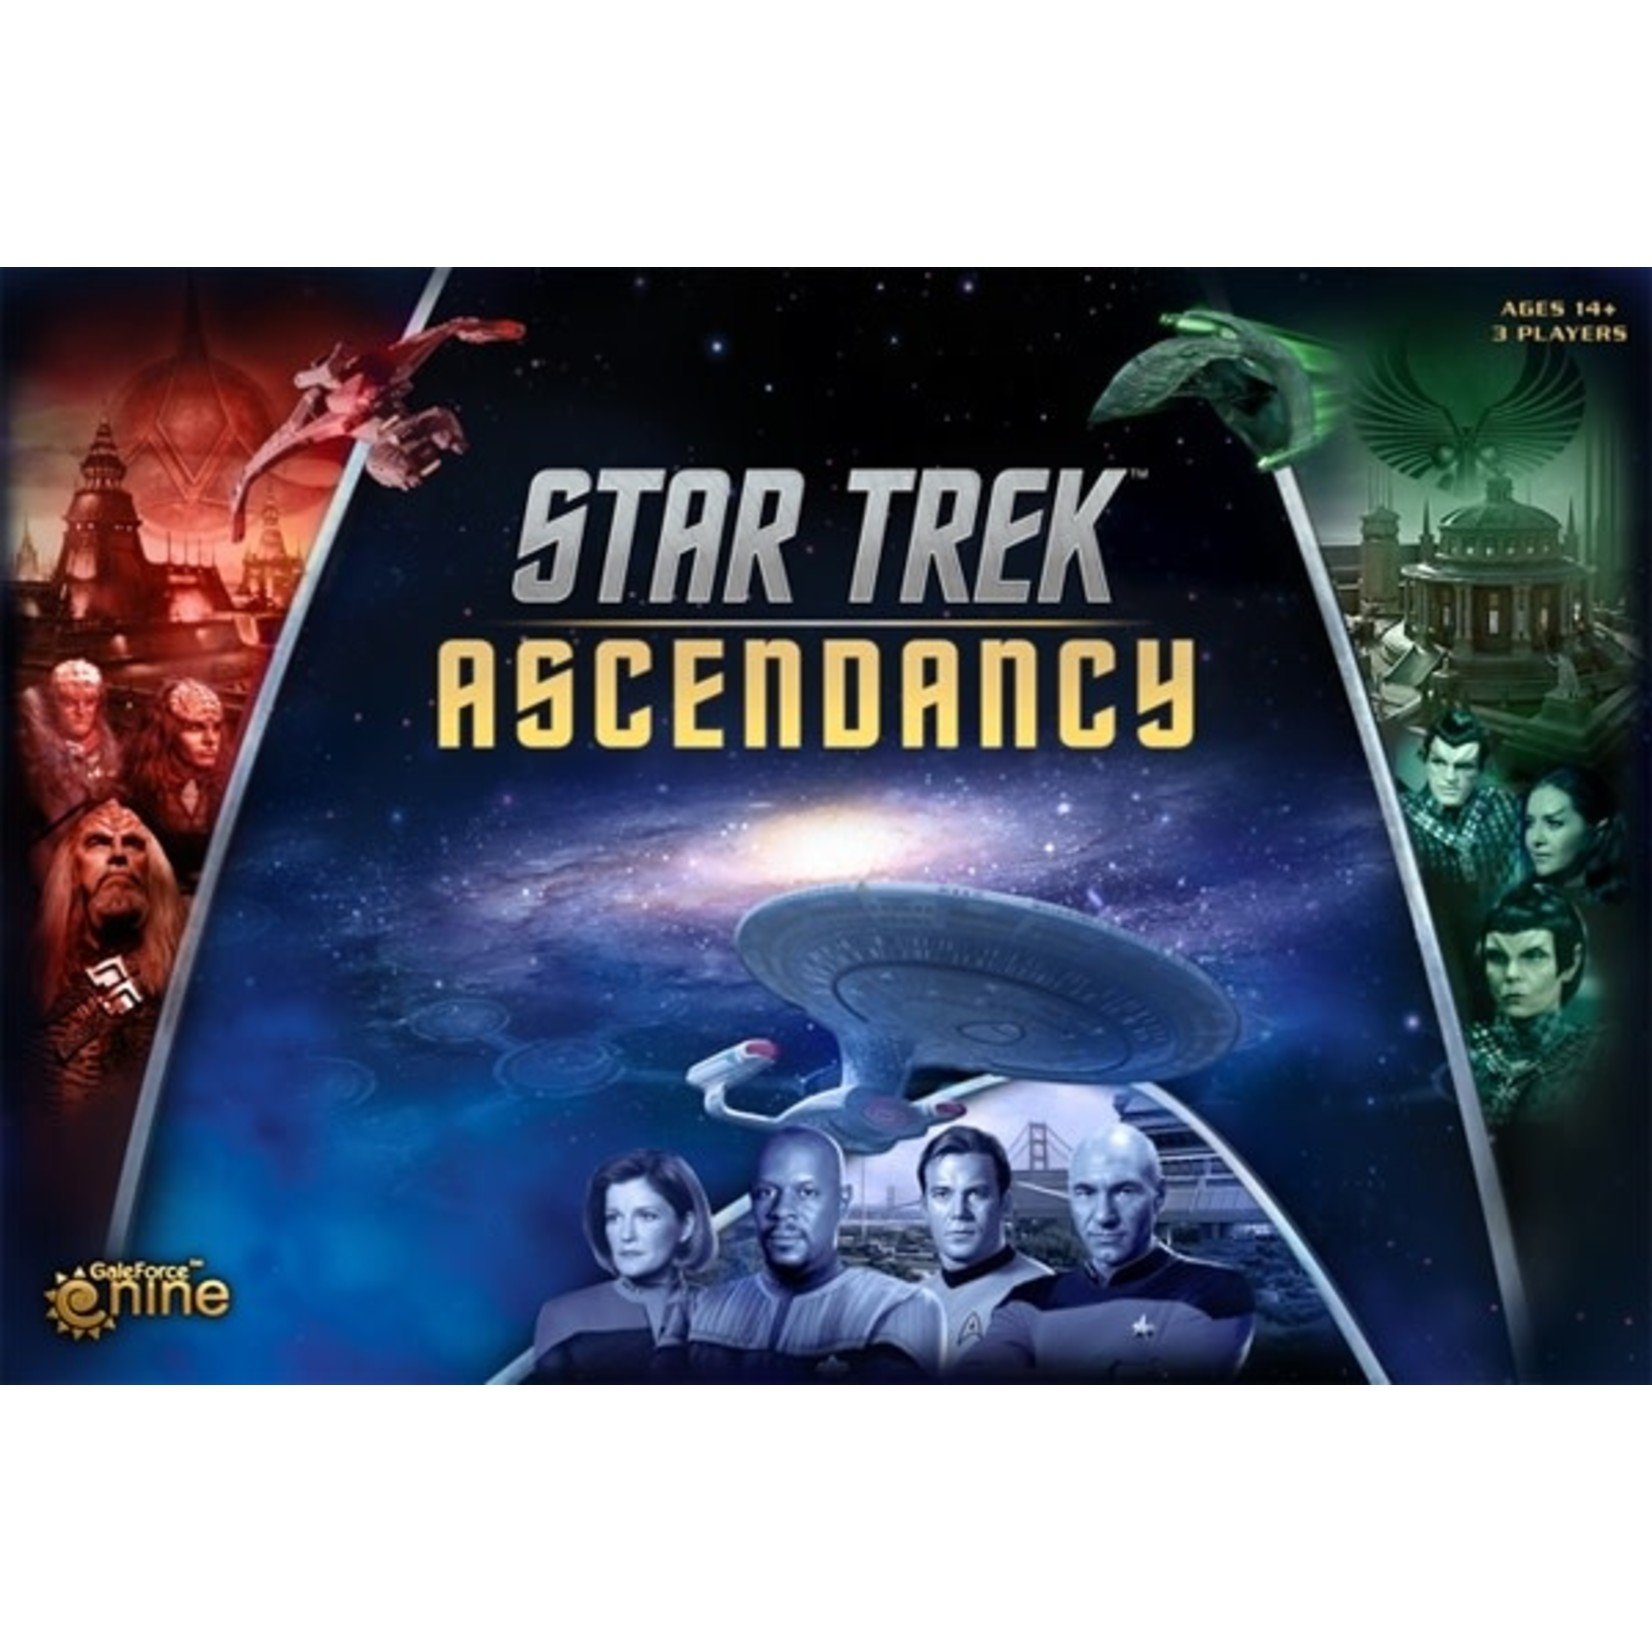 Star Trek Ascendancy Game